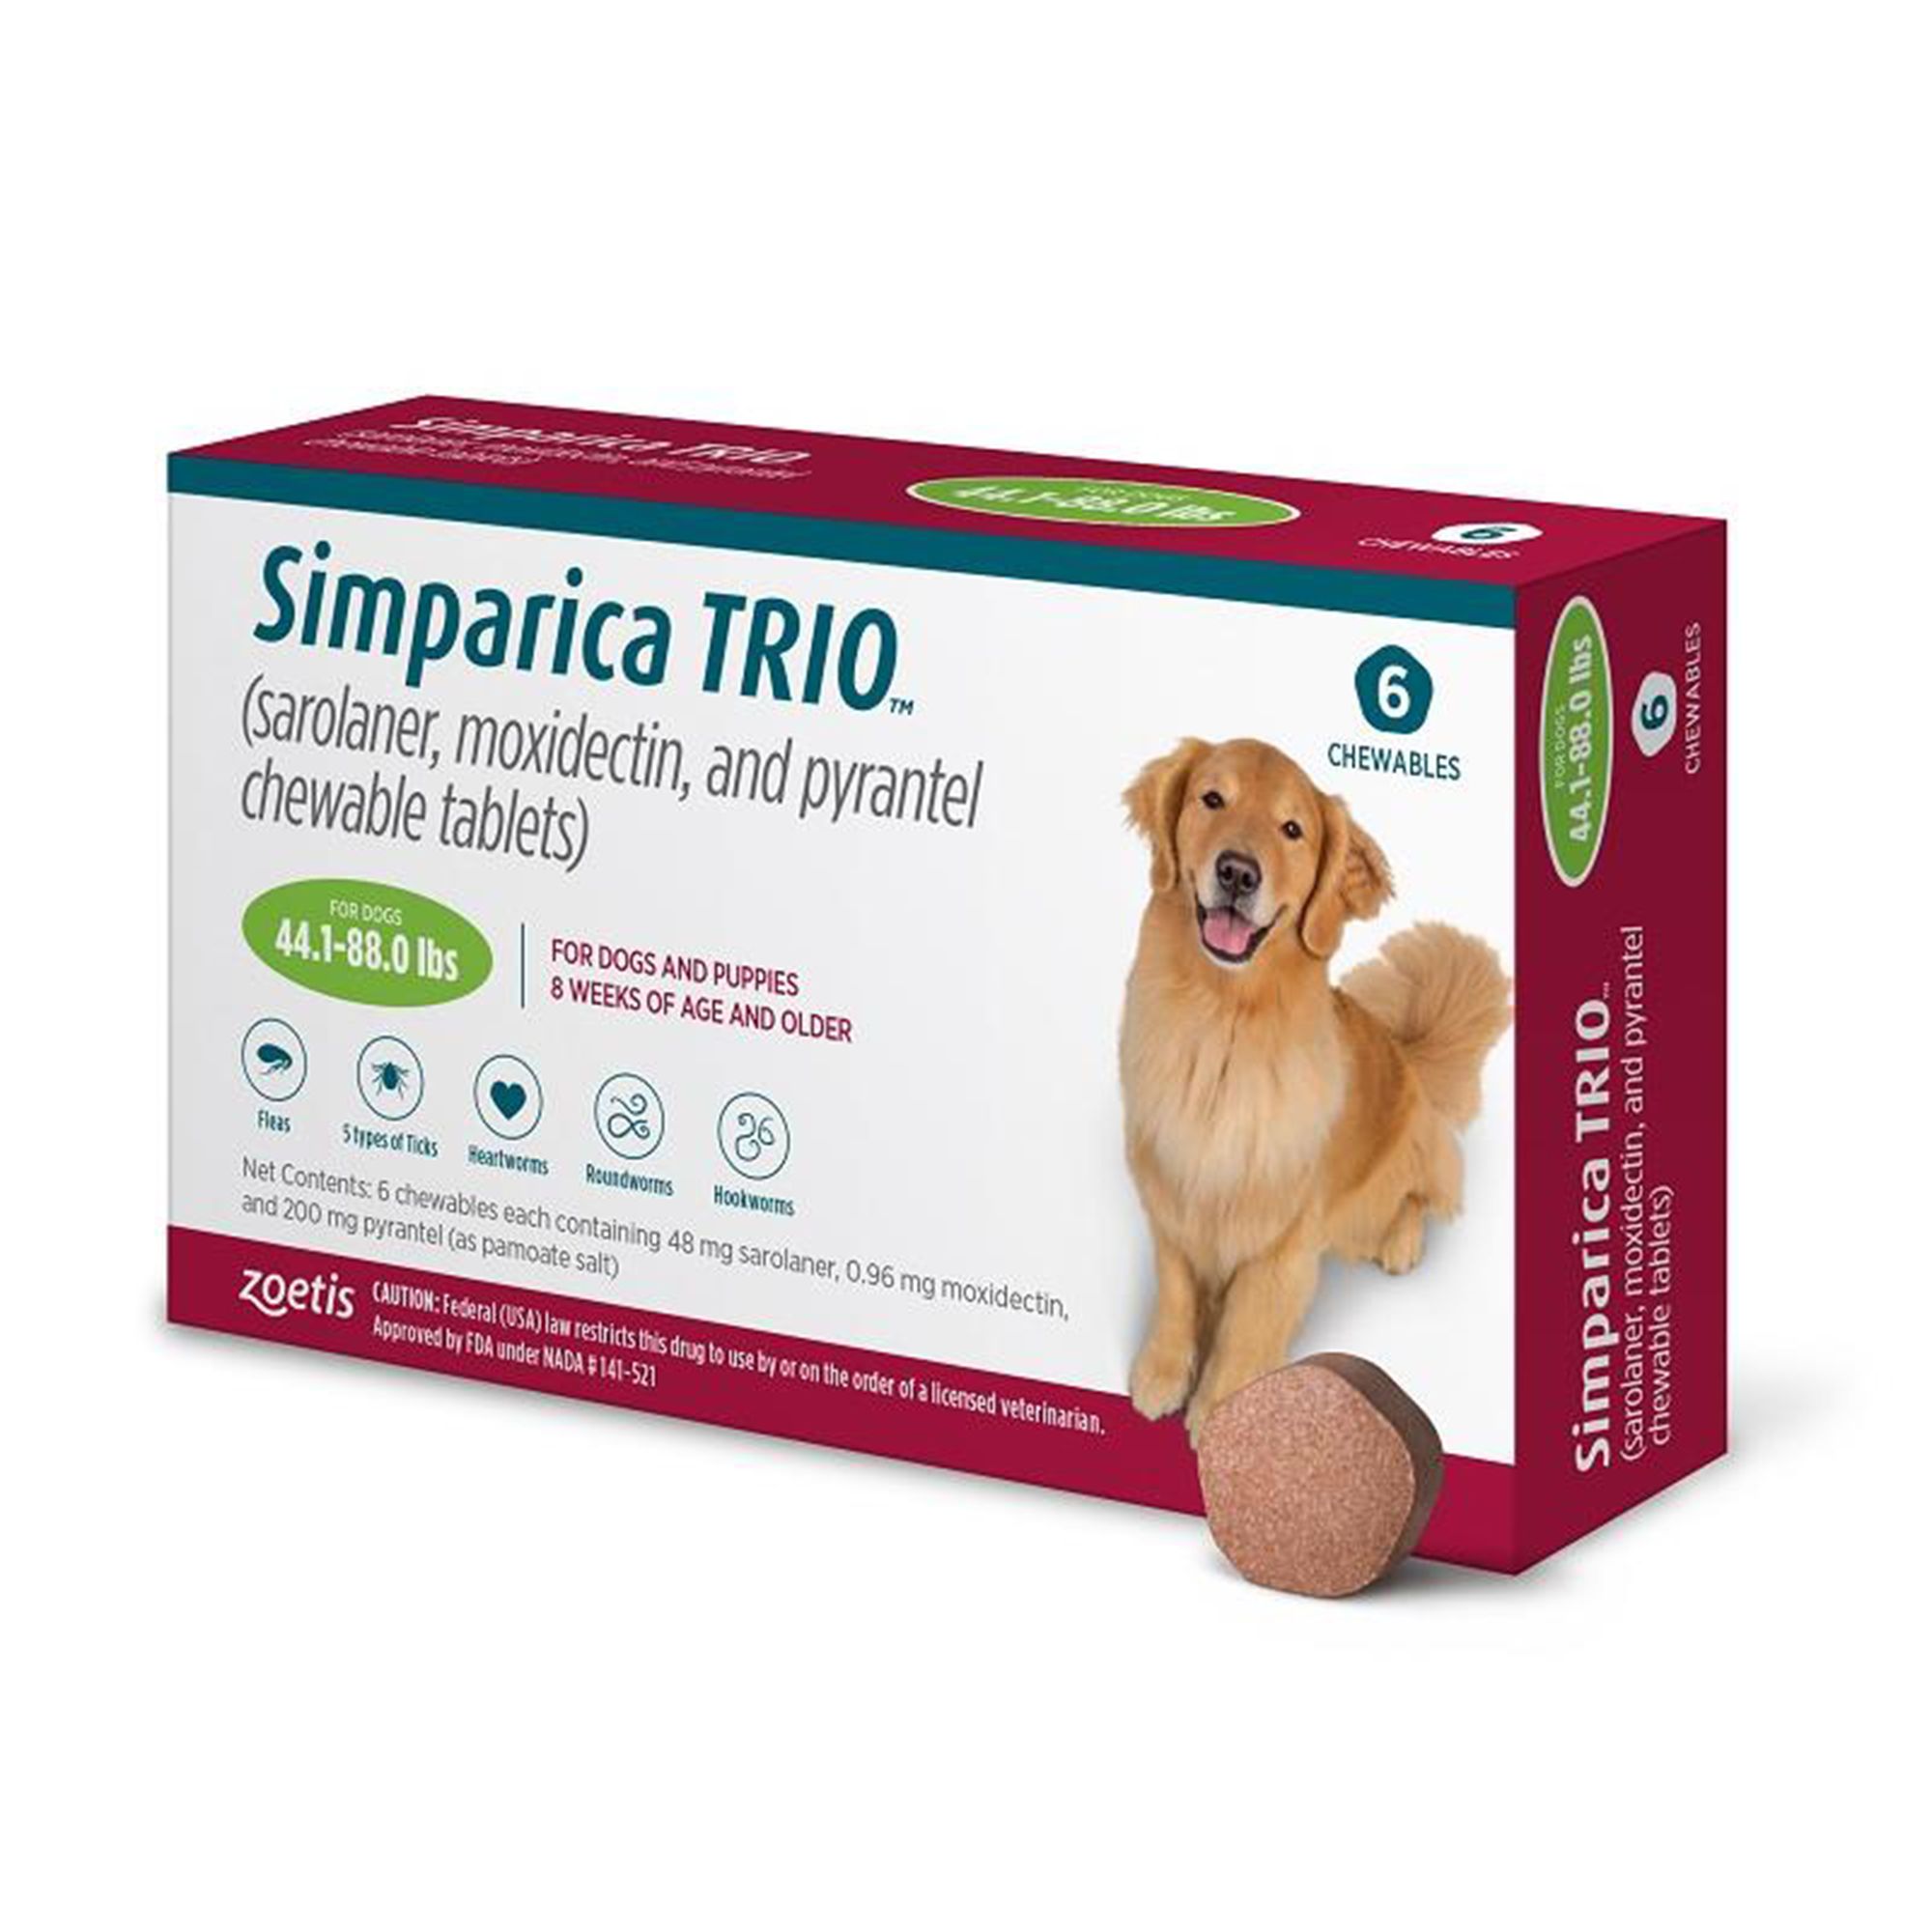 Dog Medication - Prescription Dog Medicine